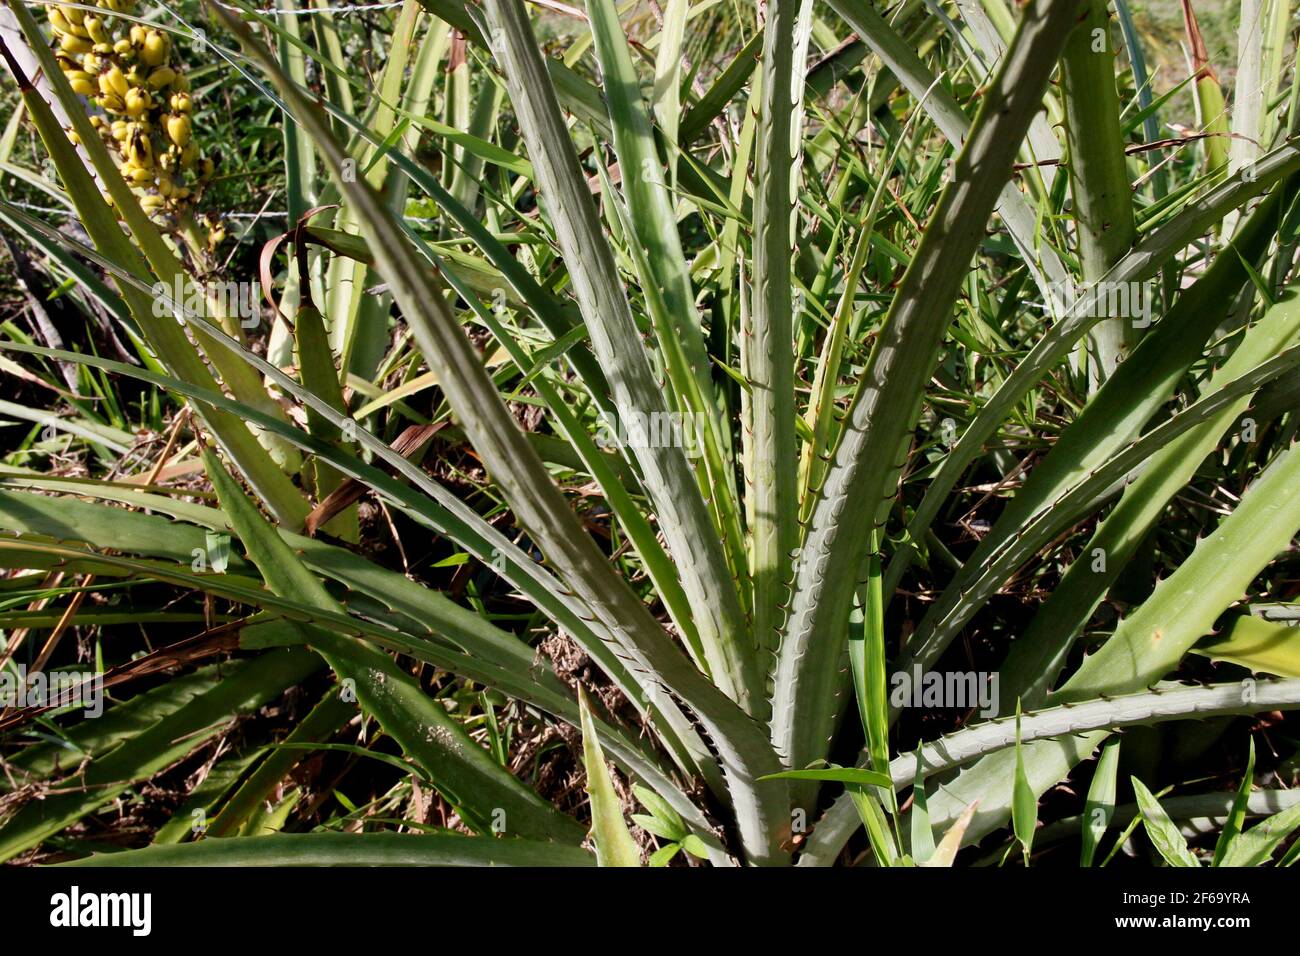 conde, bahia / brazil - june 14,2013: bromelia macambira, plant that pusssui espeinho is seen in the city of Conde. *** Local Caption ***  . Stock Photo